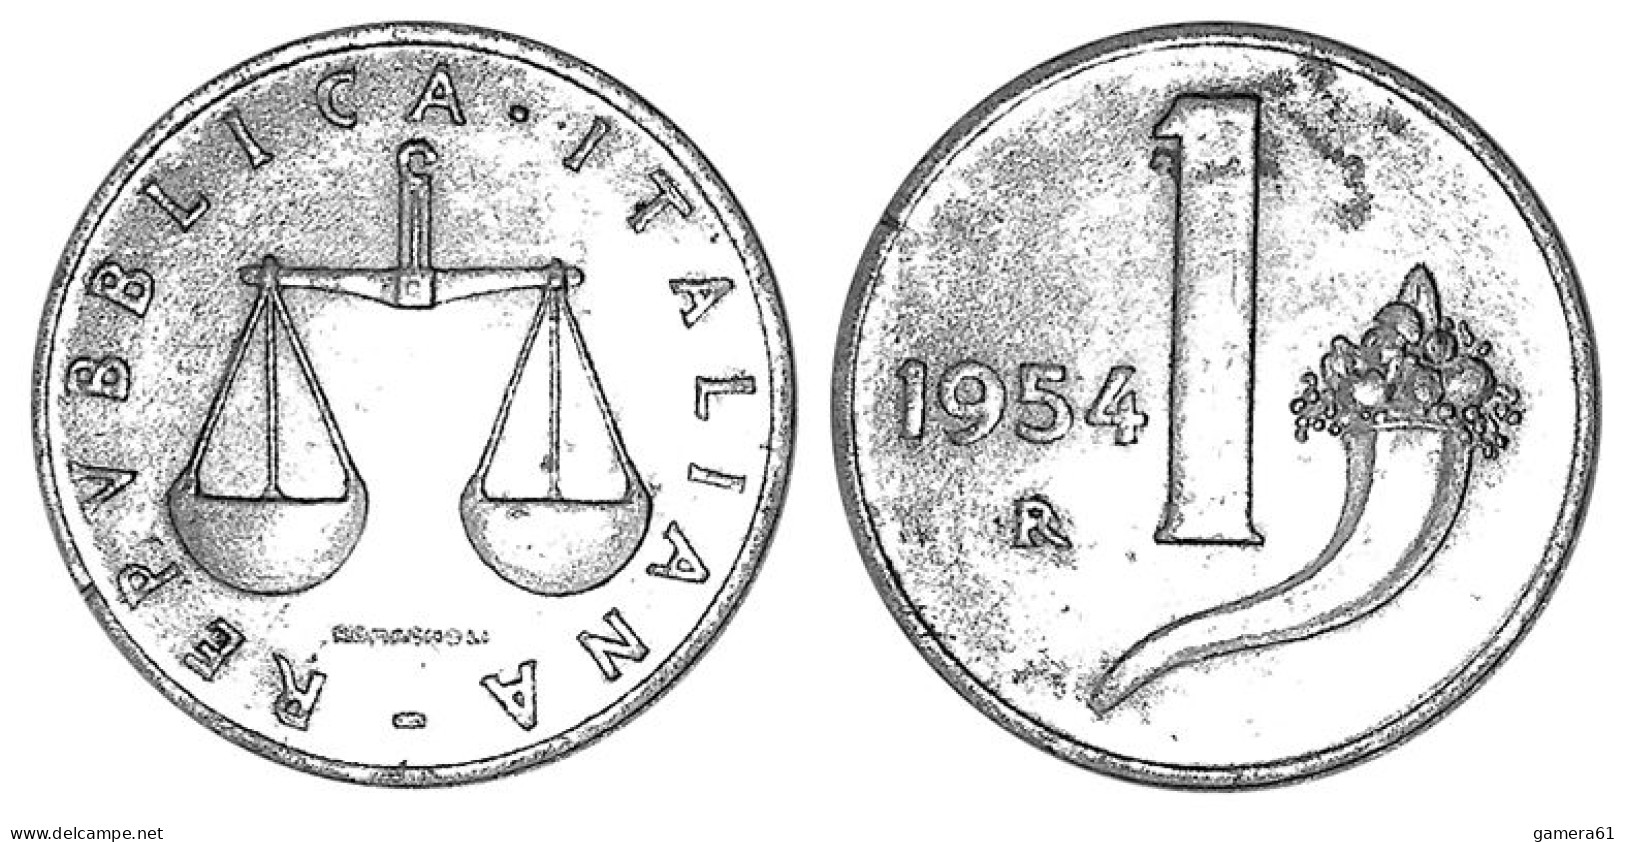 04689 MONETA REPUBLICA ITALIANA 1 LIRA 1954 - 1 Lira